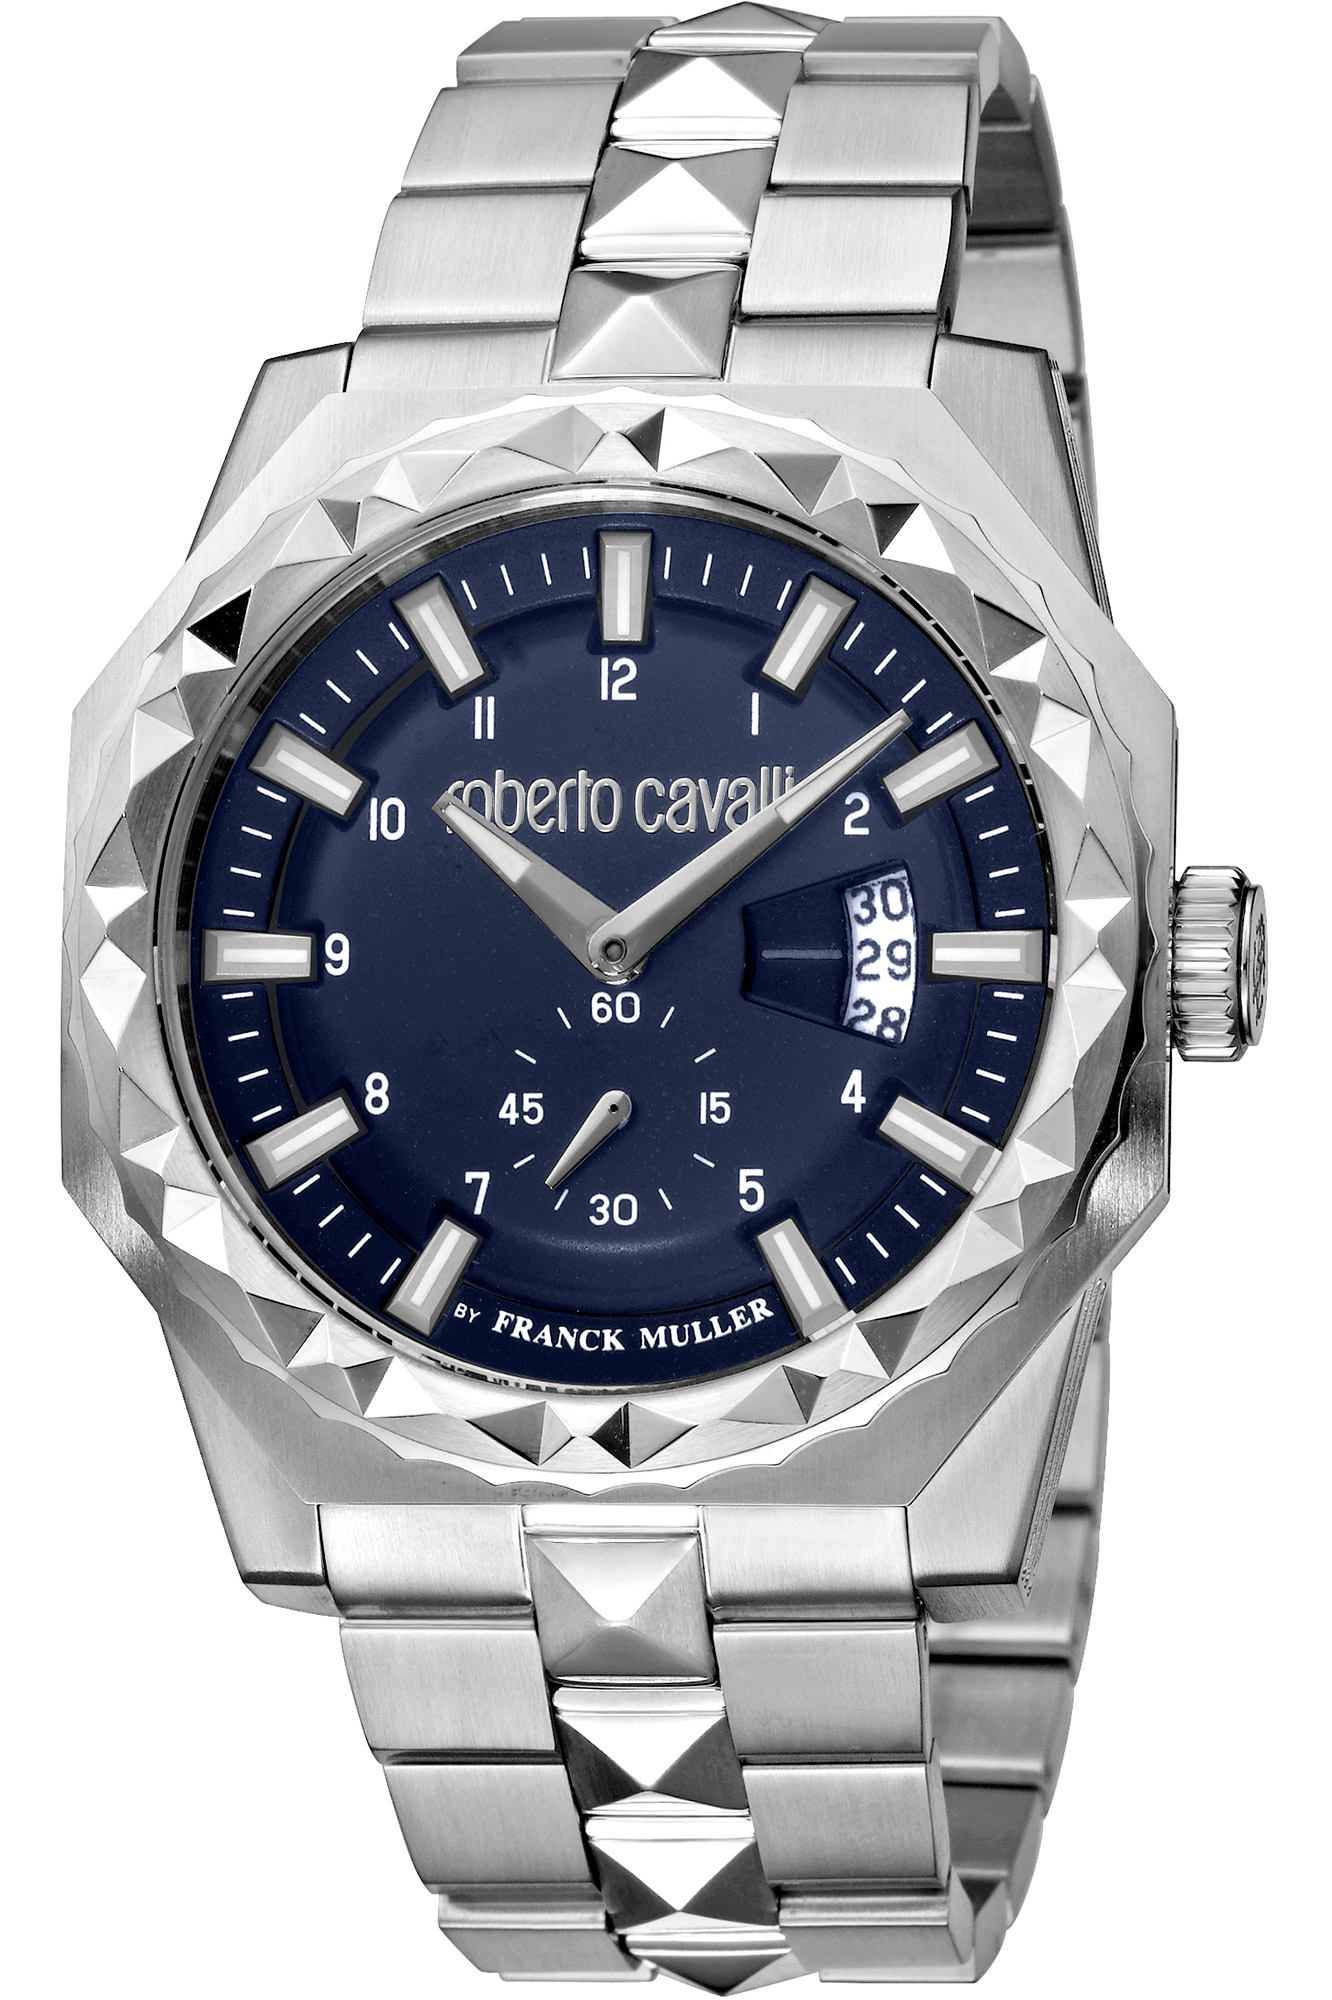 Reloj Roberto Cavalli by Franck Muller rv1g069m0061